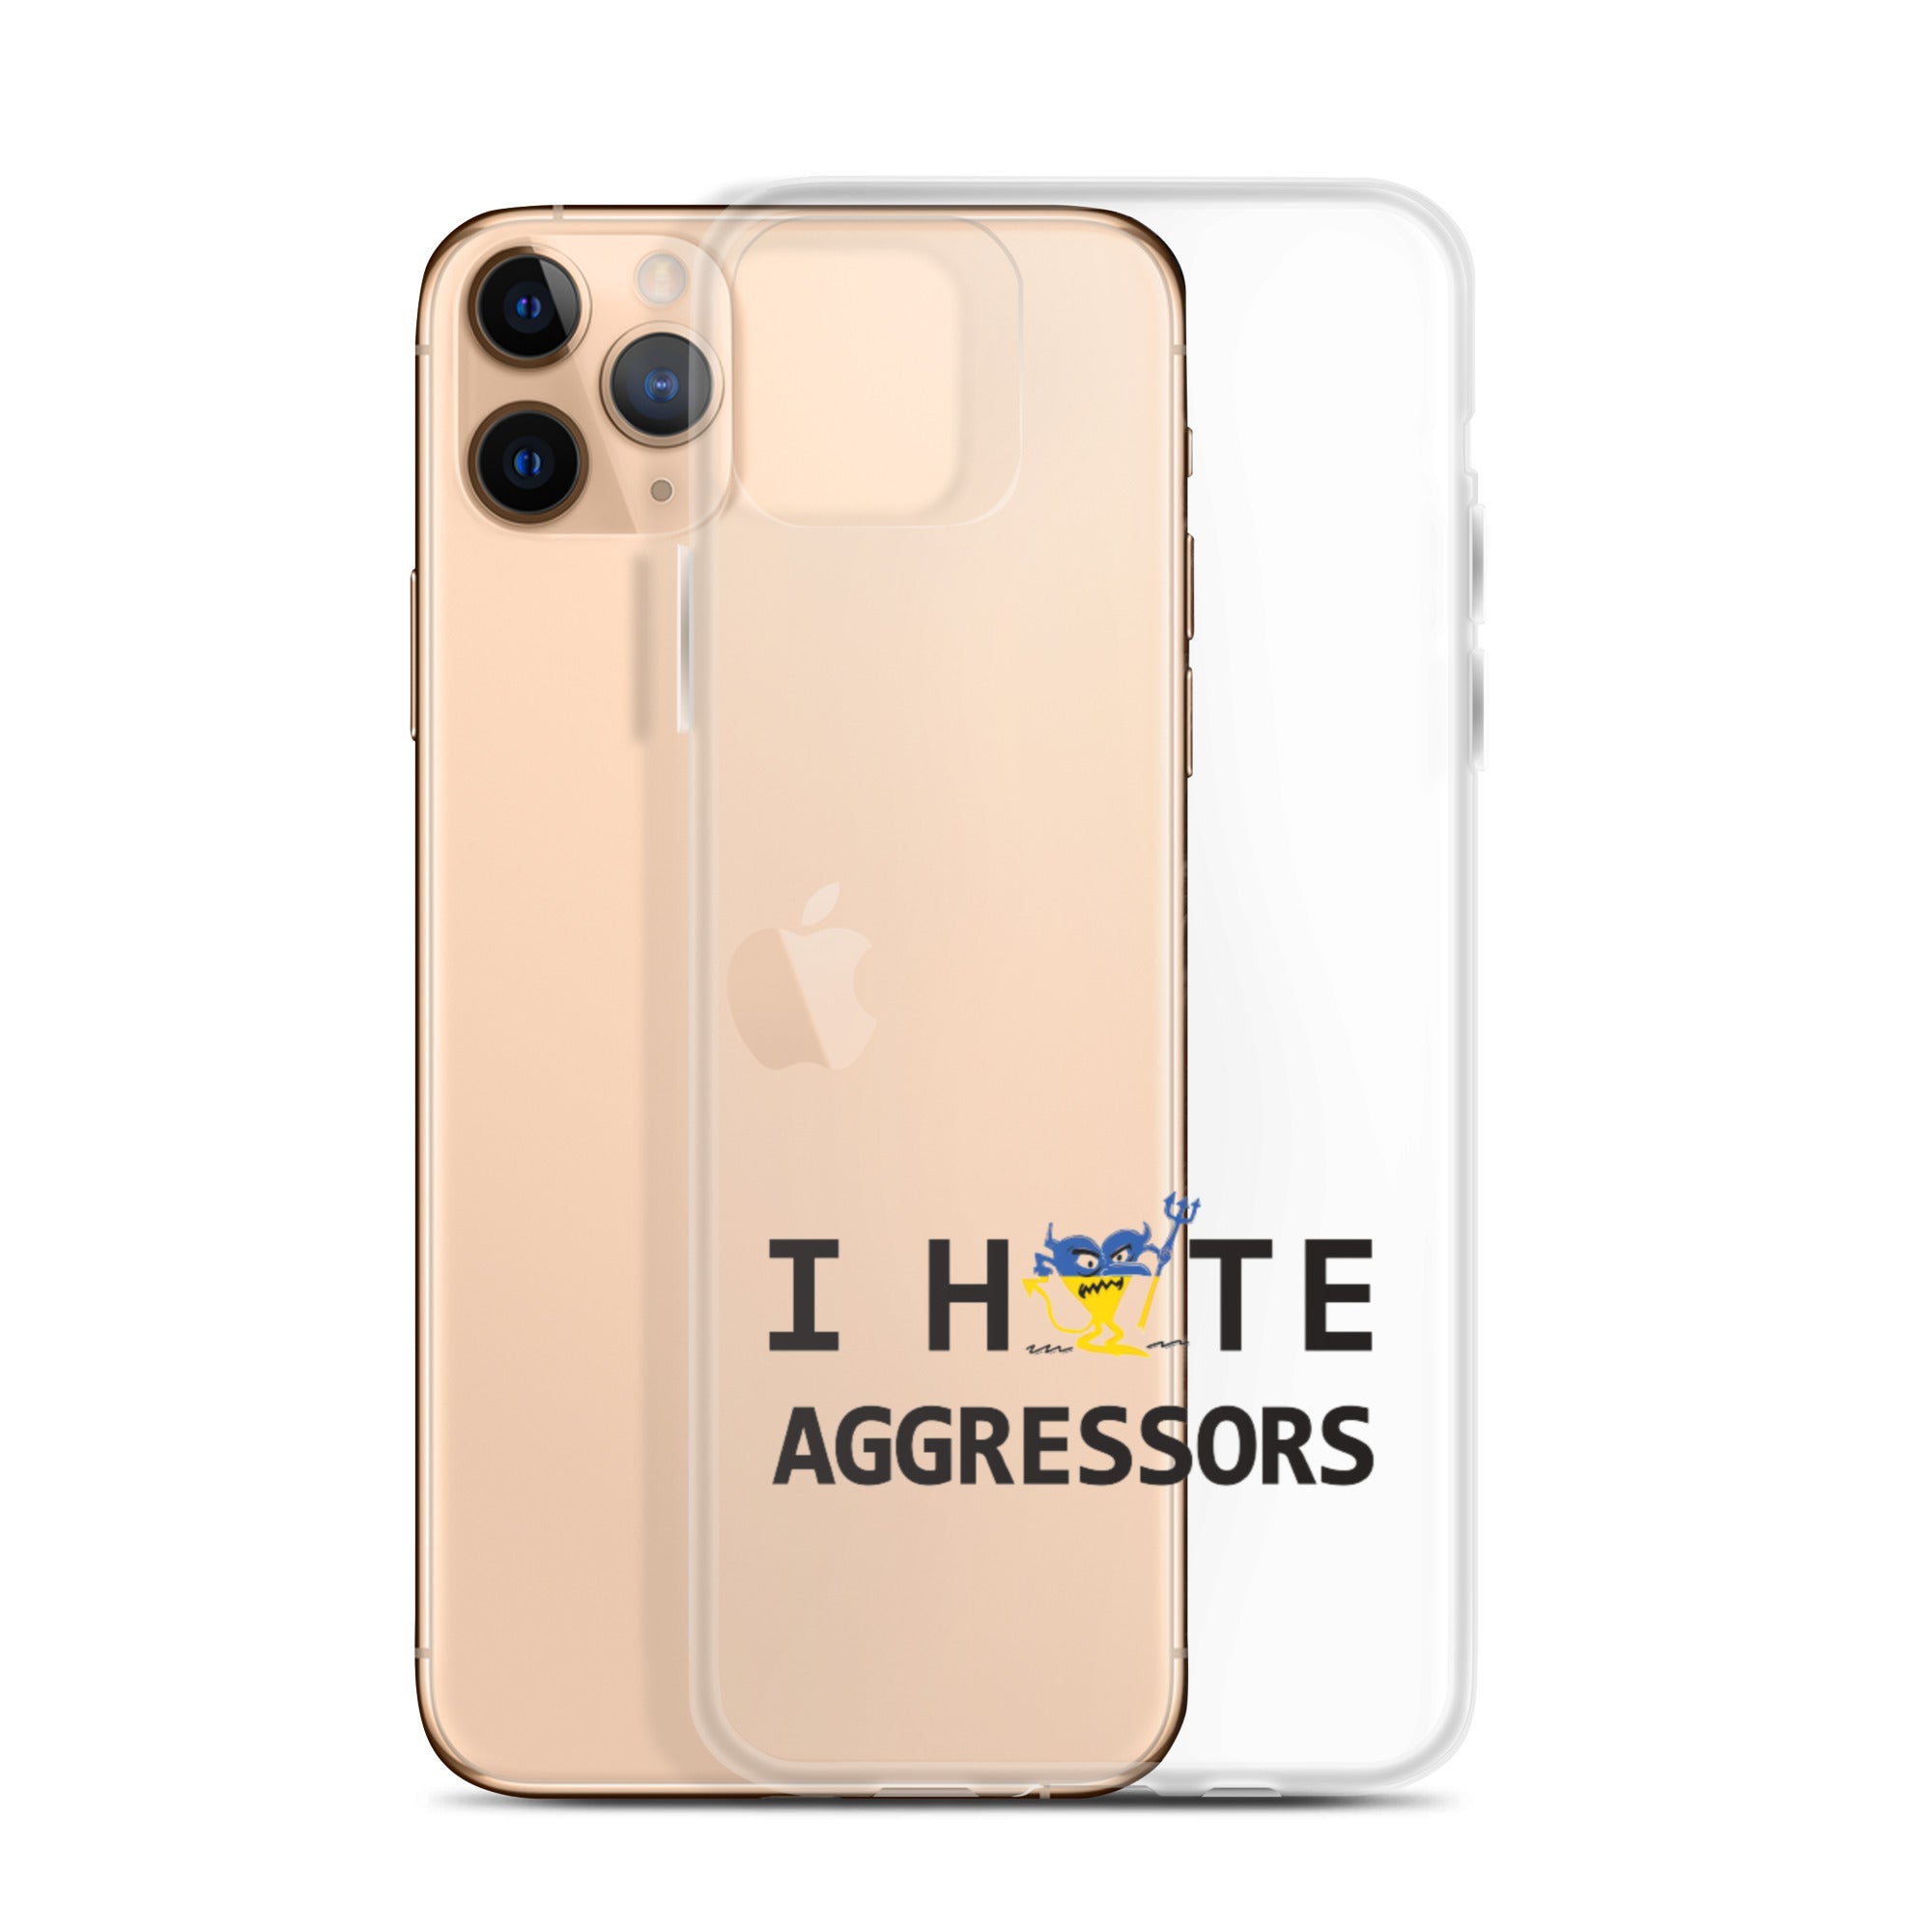 I HATE AGGRESSORS iPhone Case